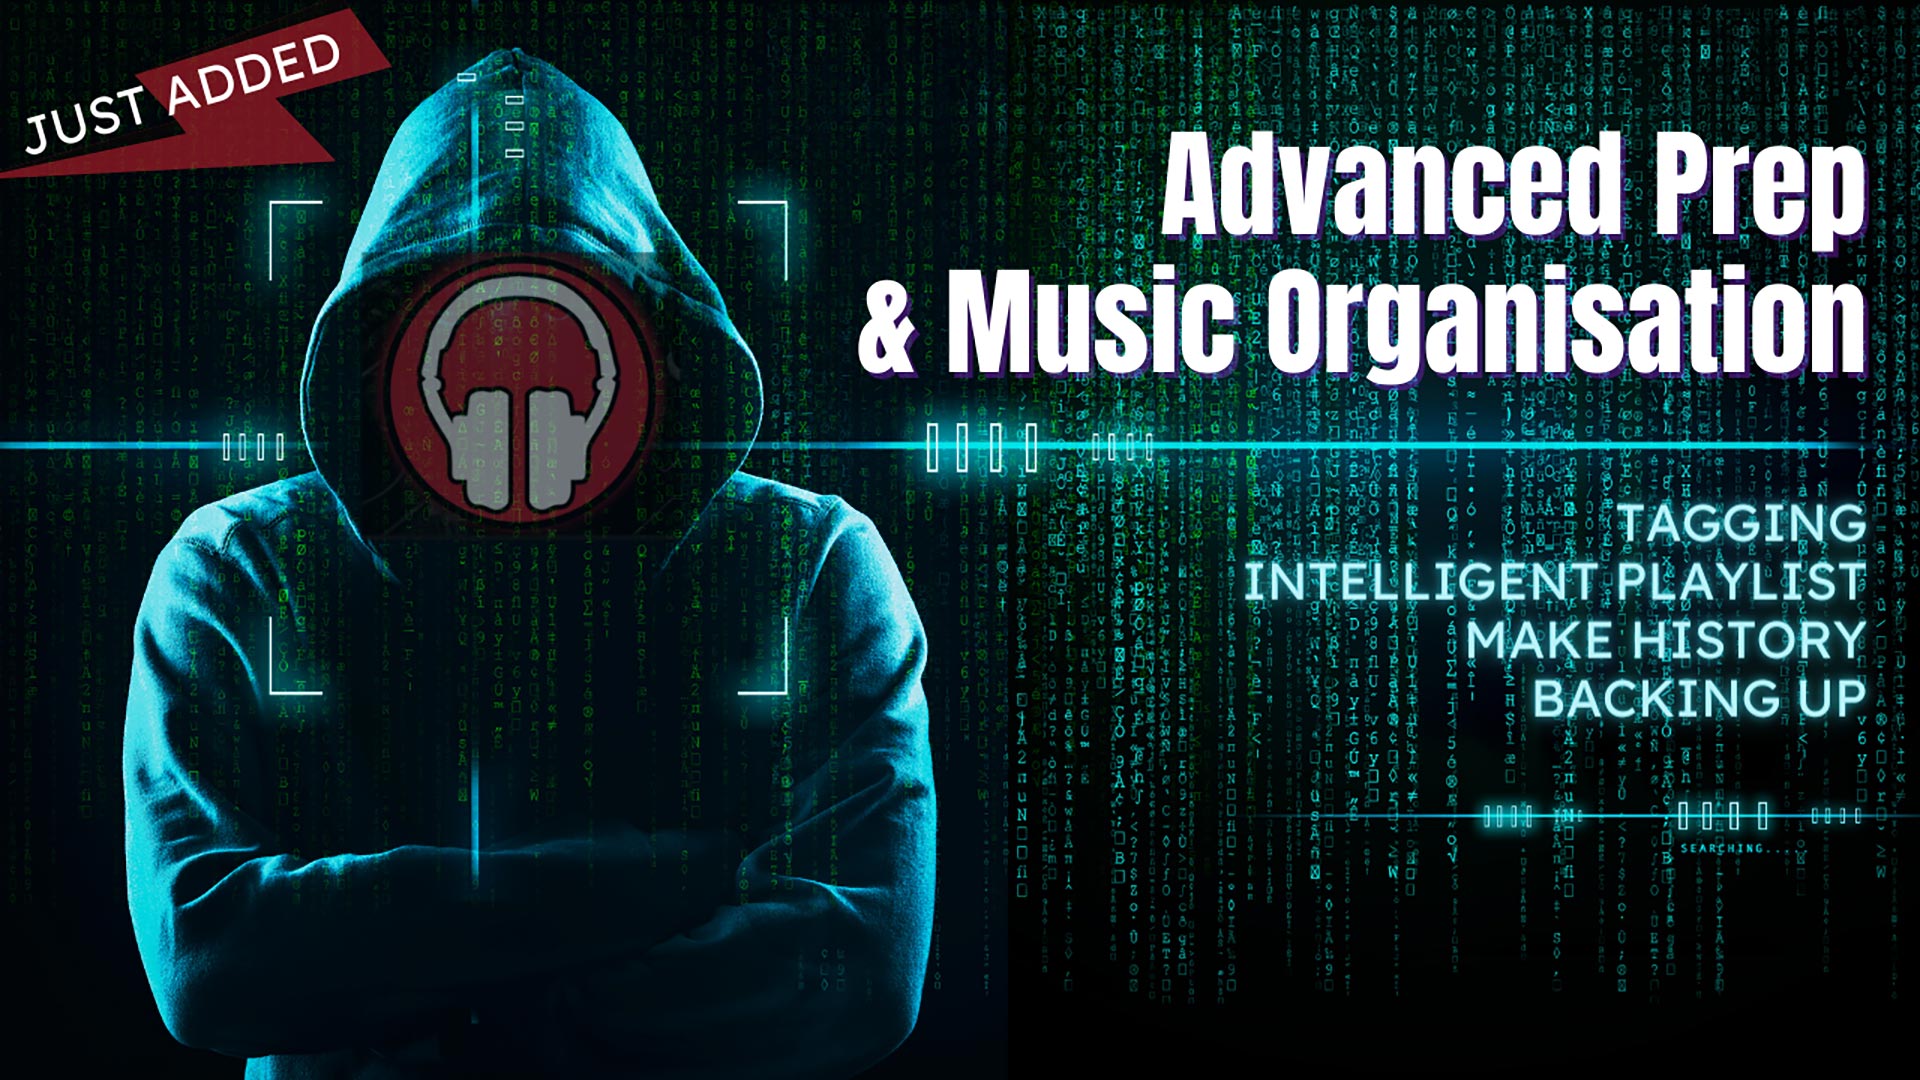 Advanced prep and music organisation Image